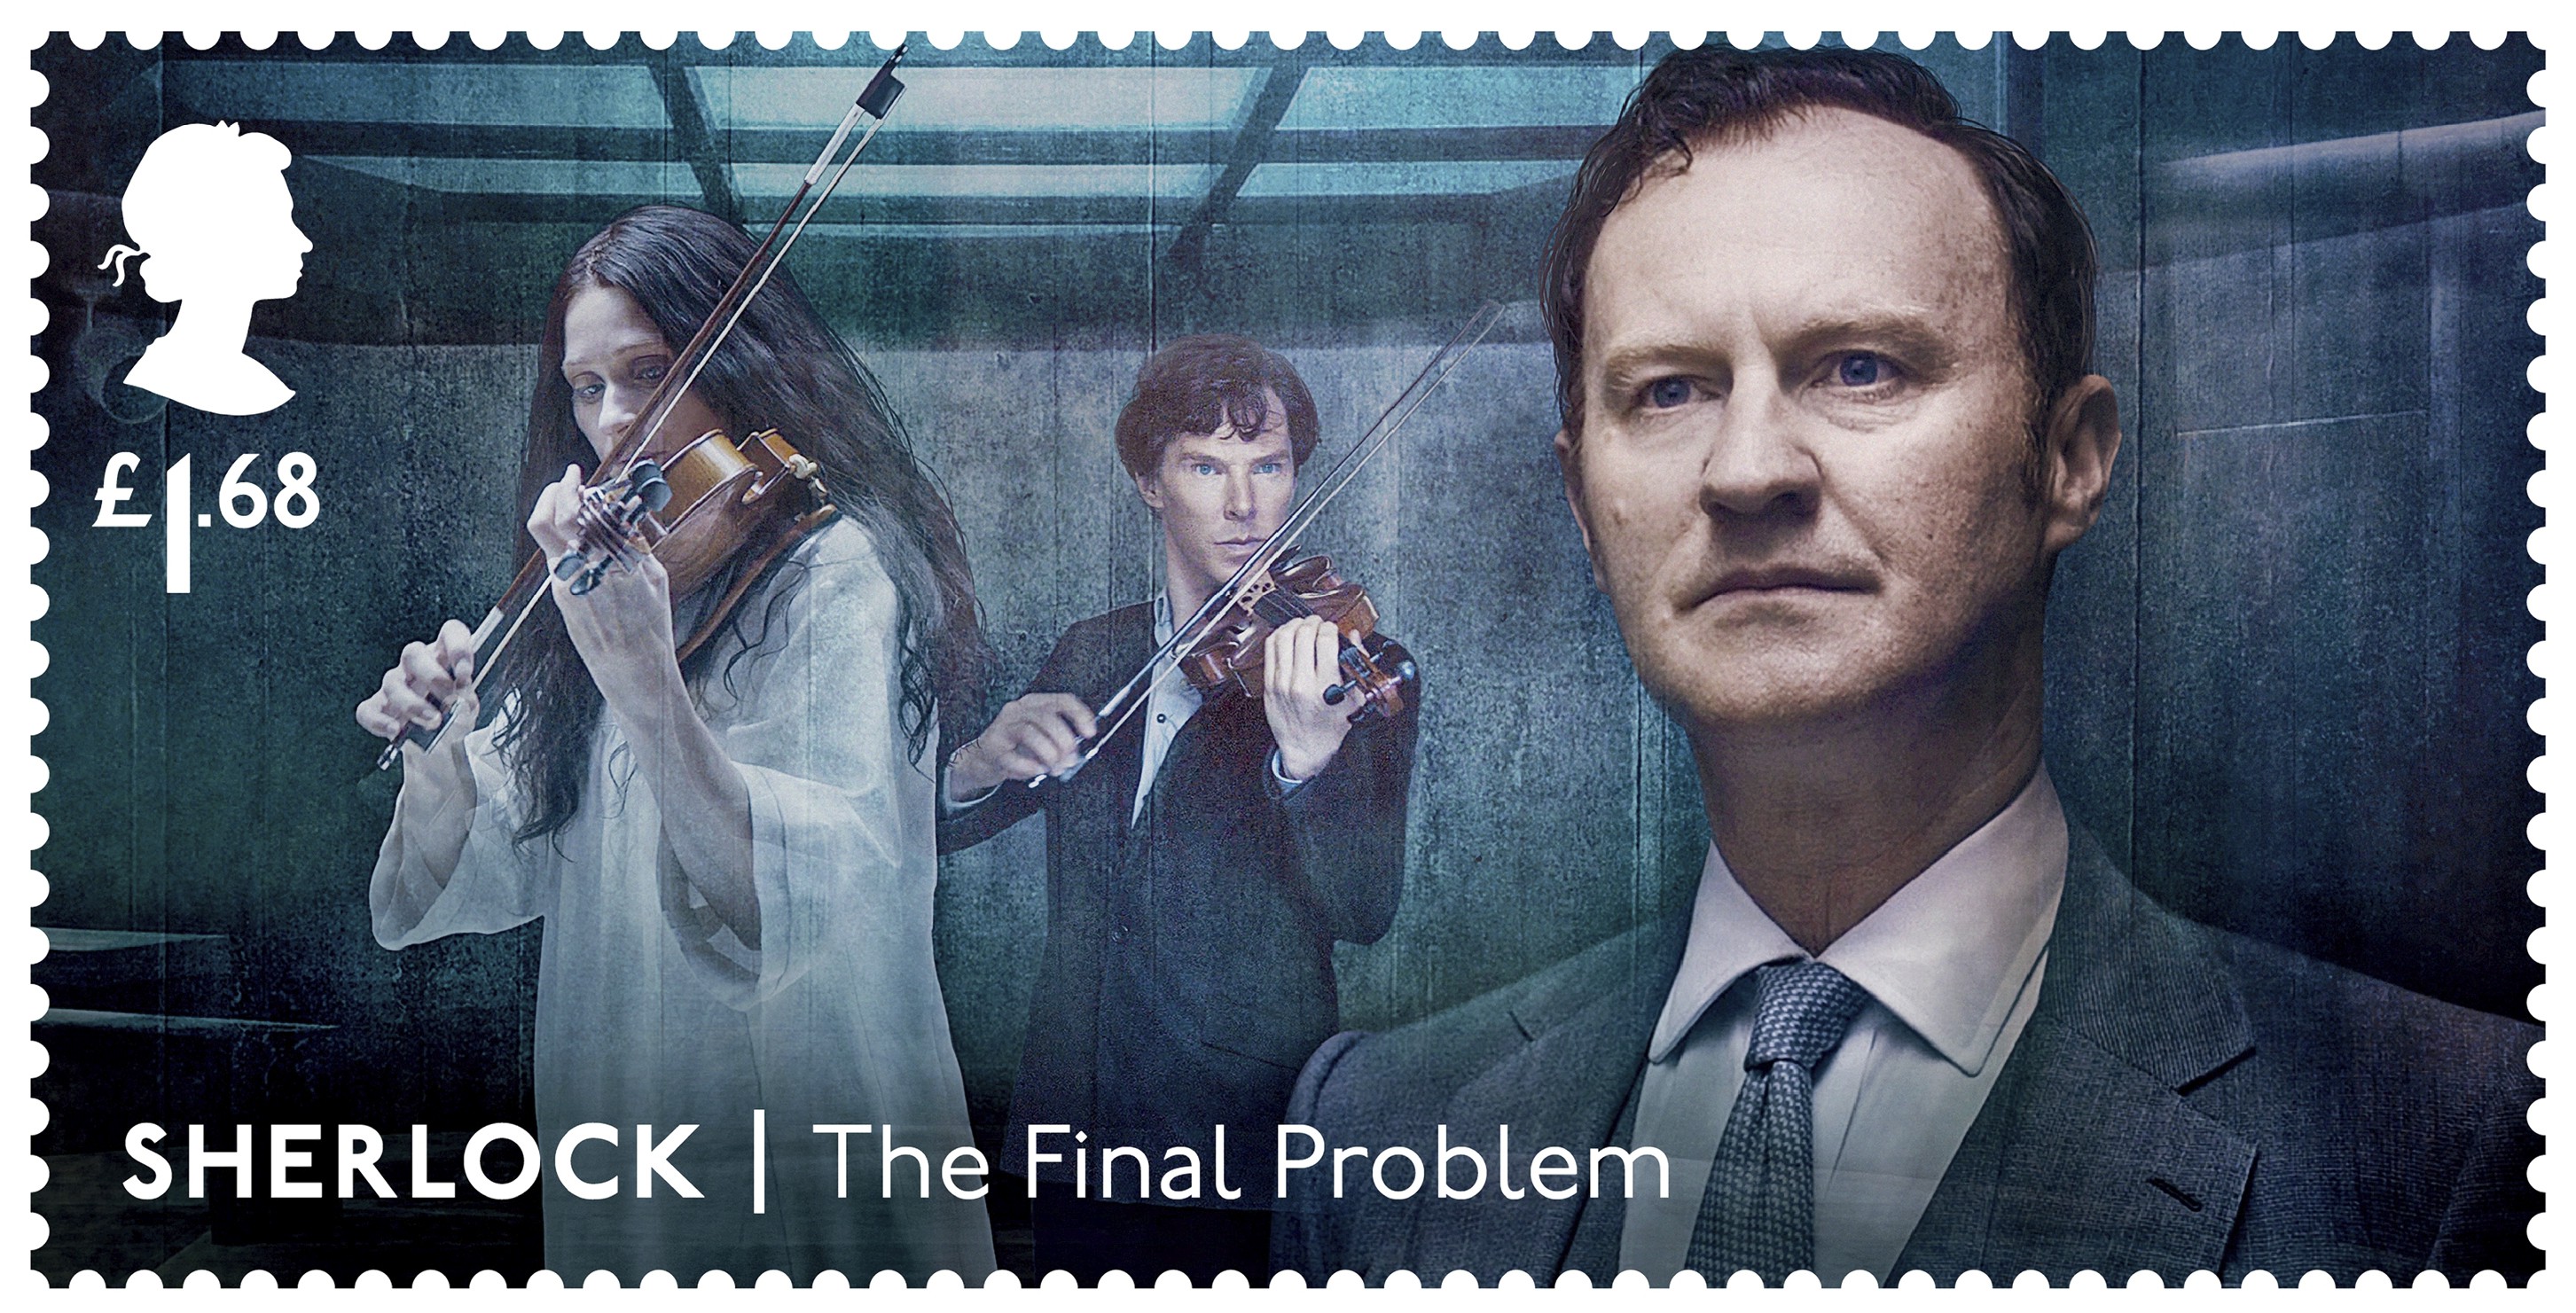 Final problem. The Final problem Sherlock.